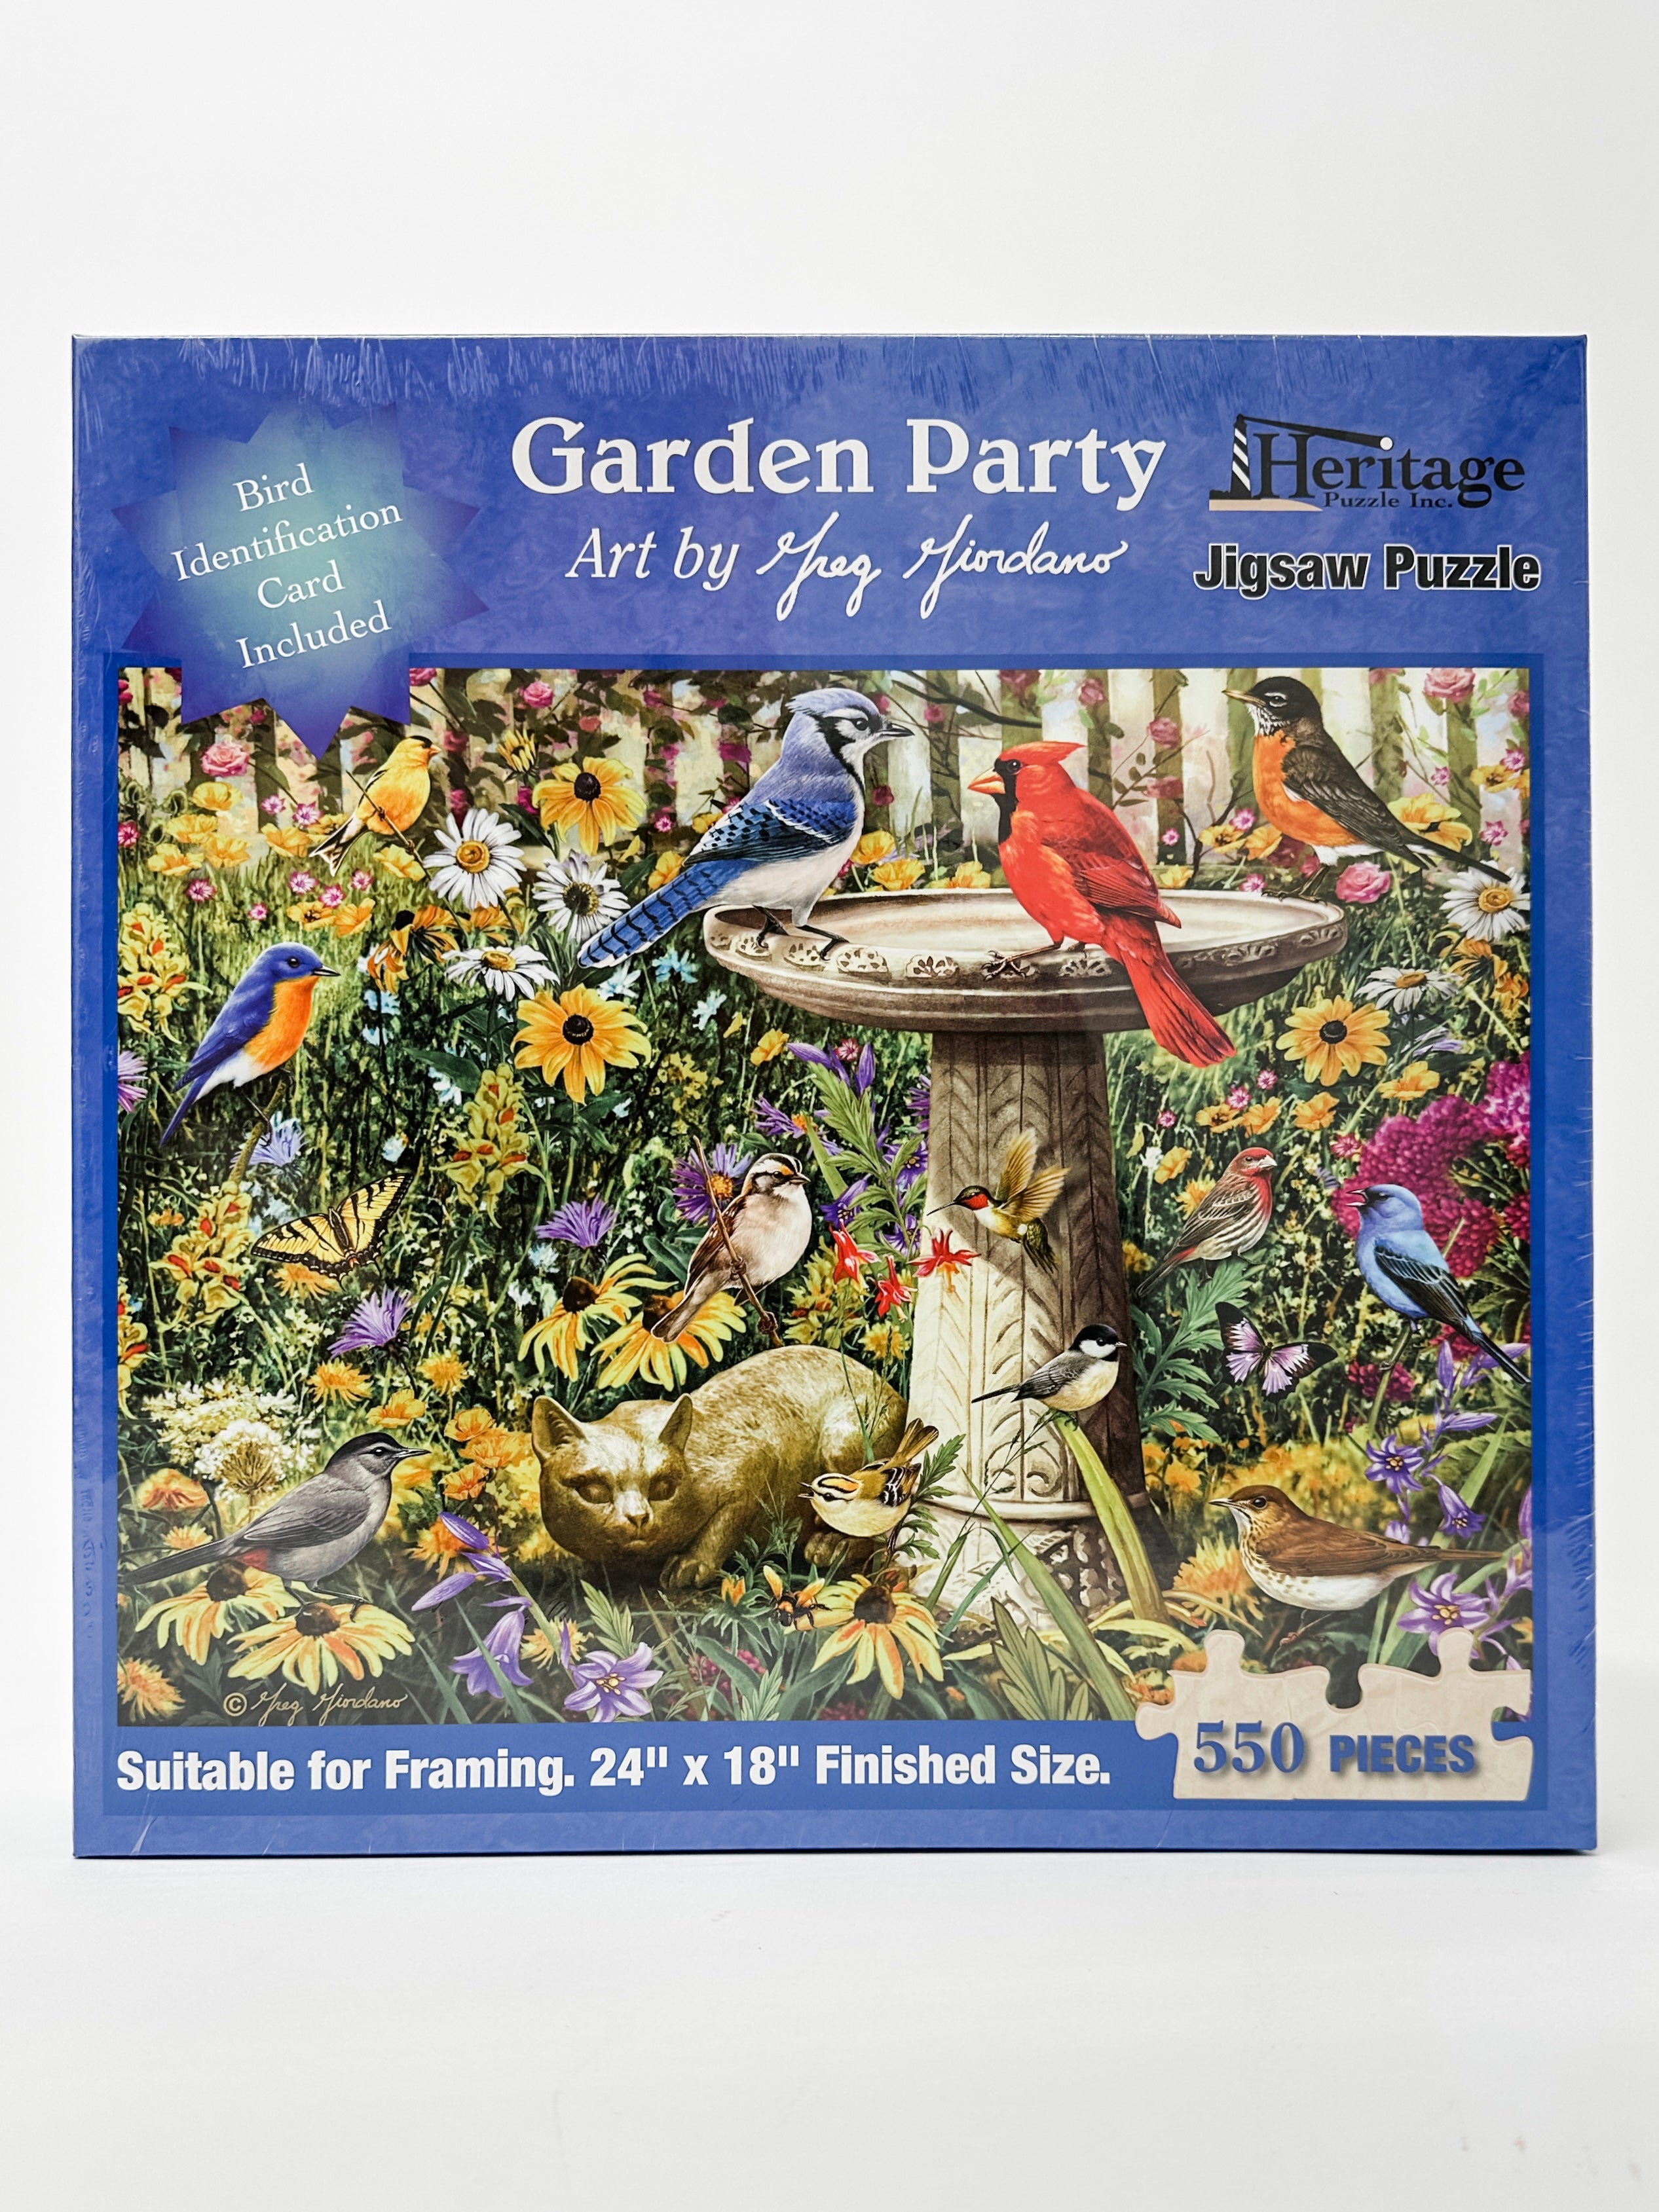 Heritage Puzzle Garden Party Puzzle